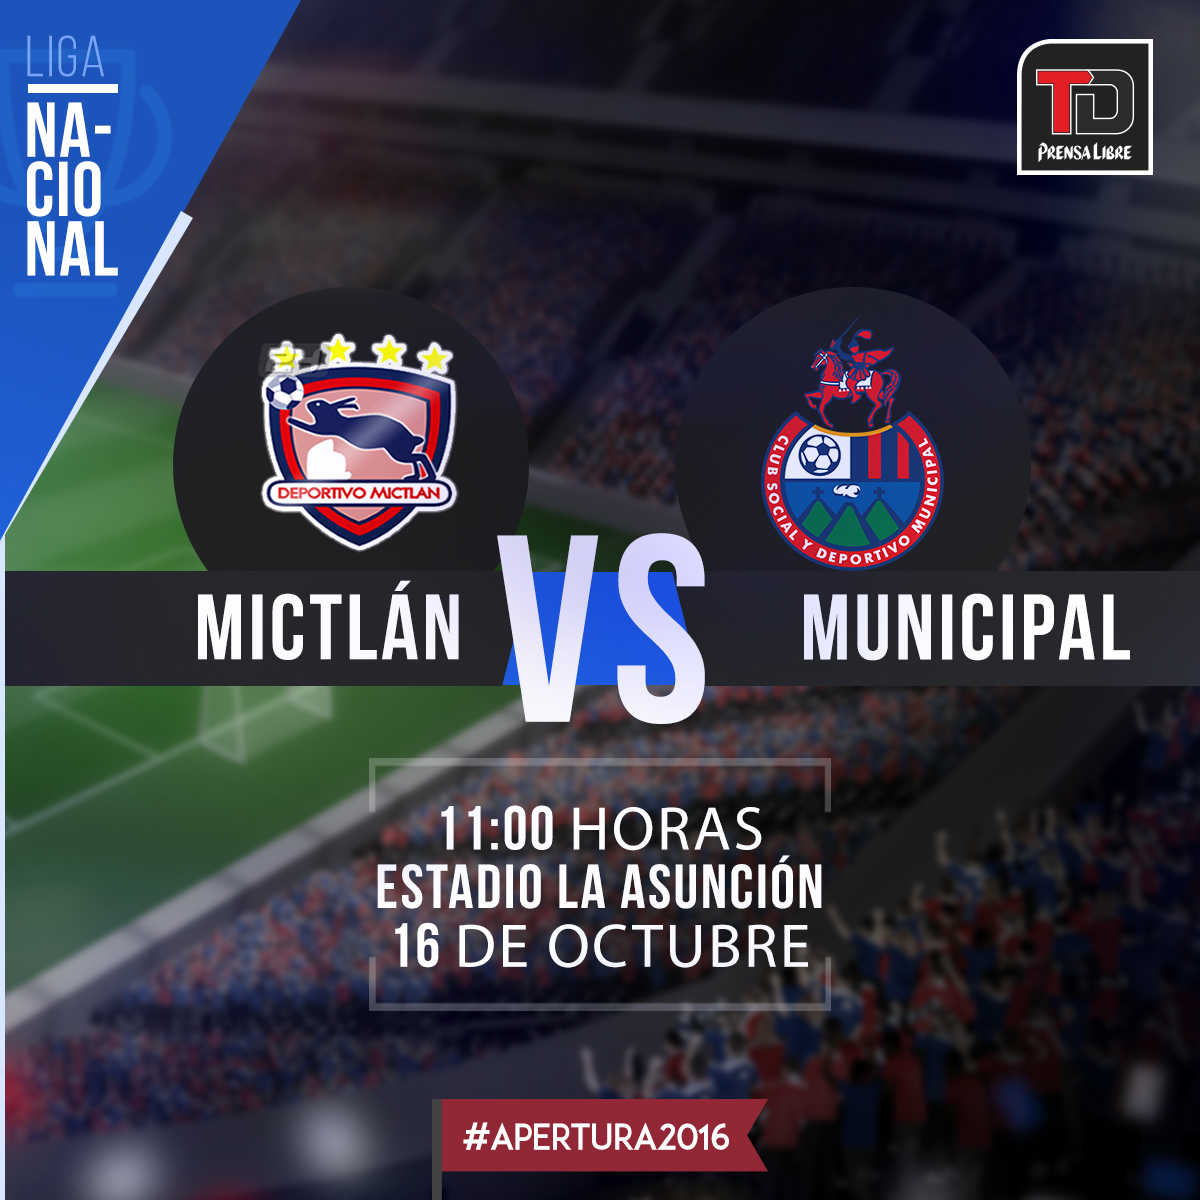 EN DIRECTO | Mictlán vs. Municipal